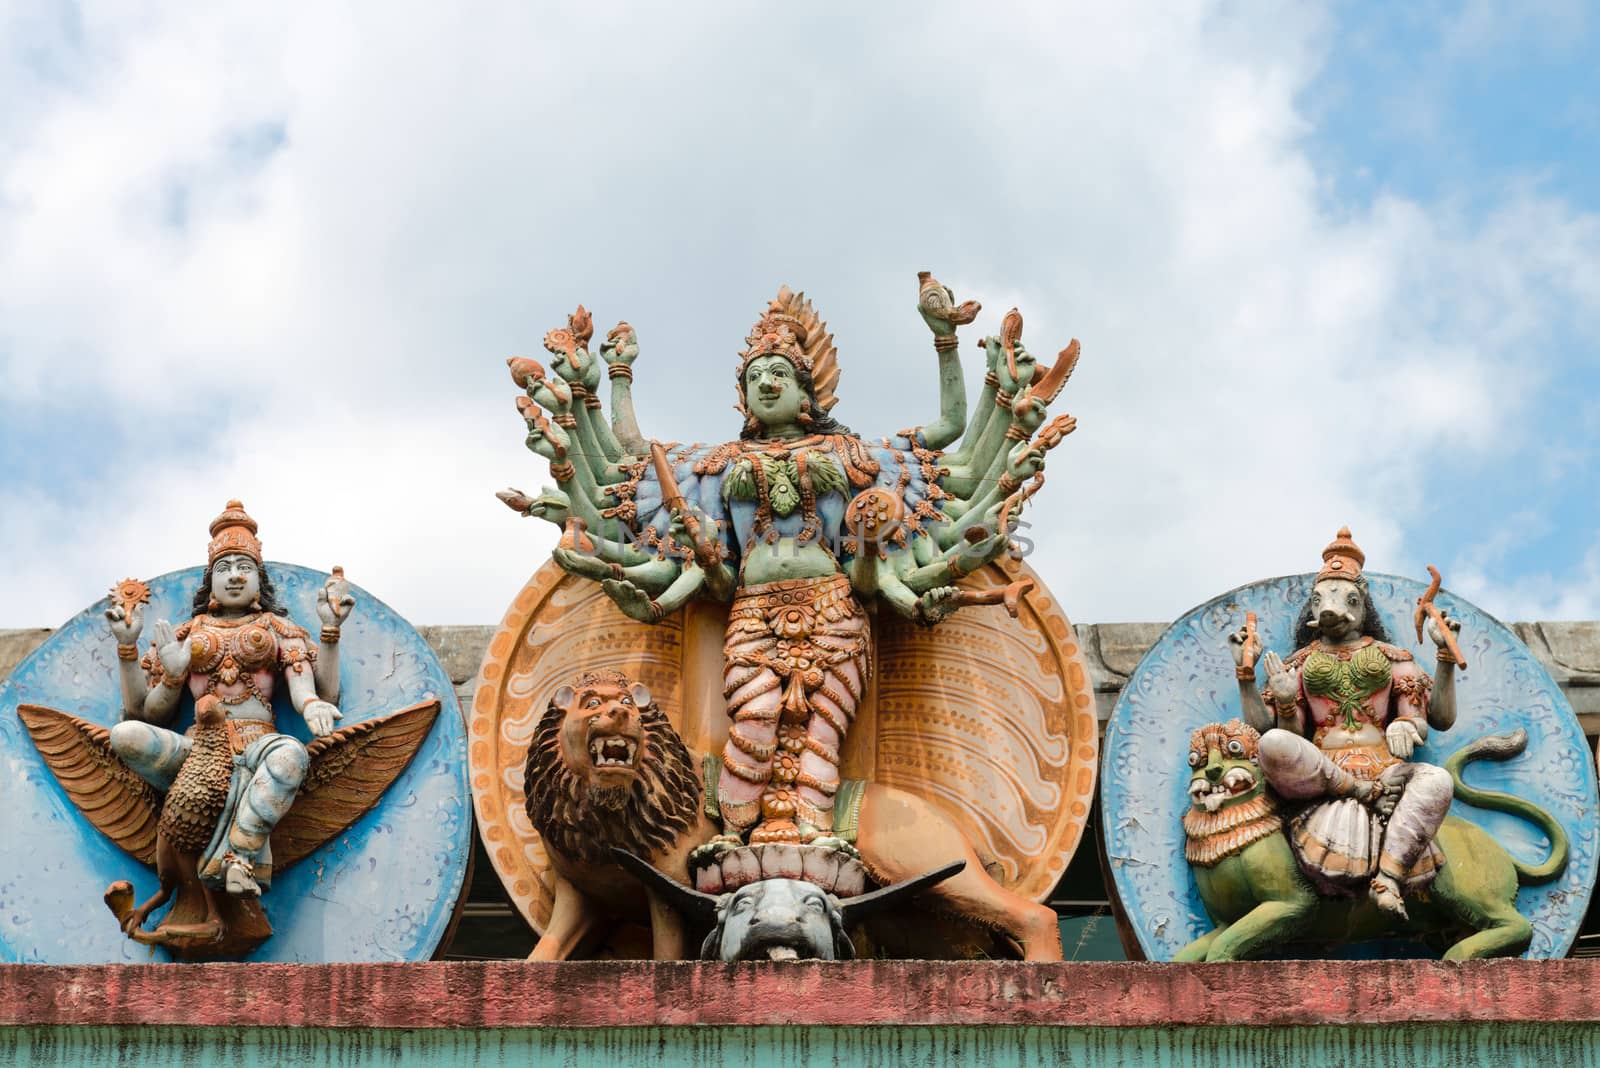 Doddess statue on big Hindu temple wall by iryna_rasko